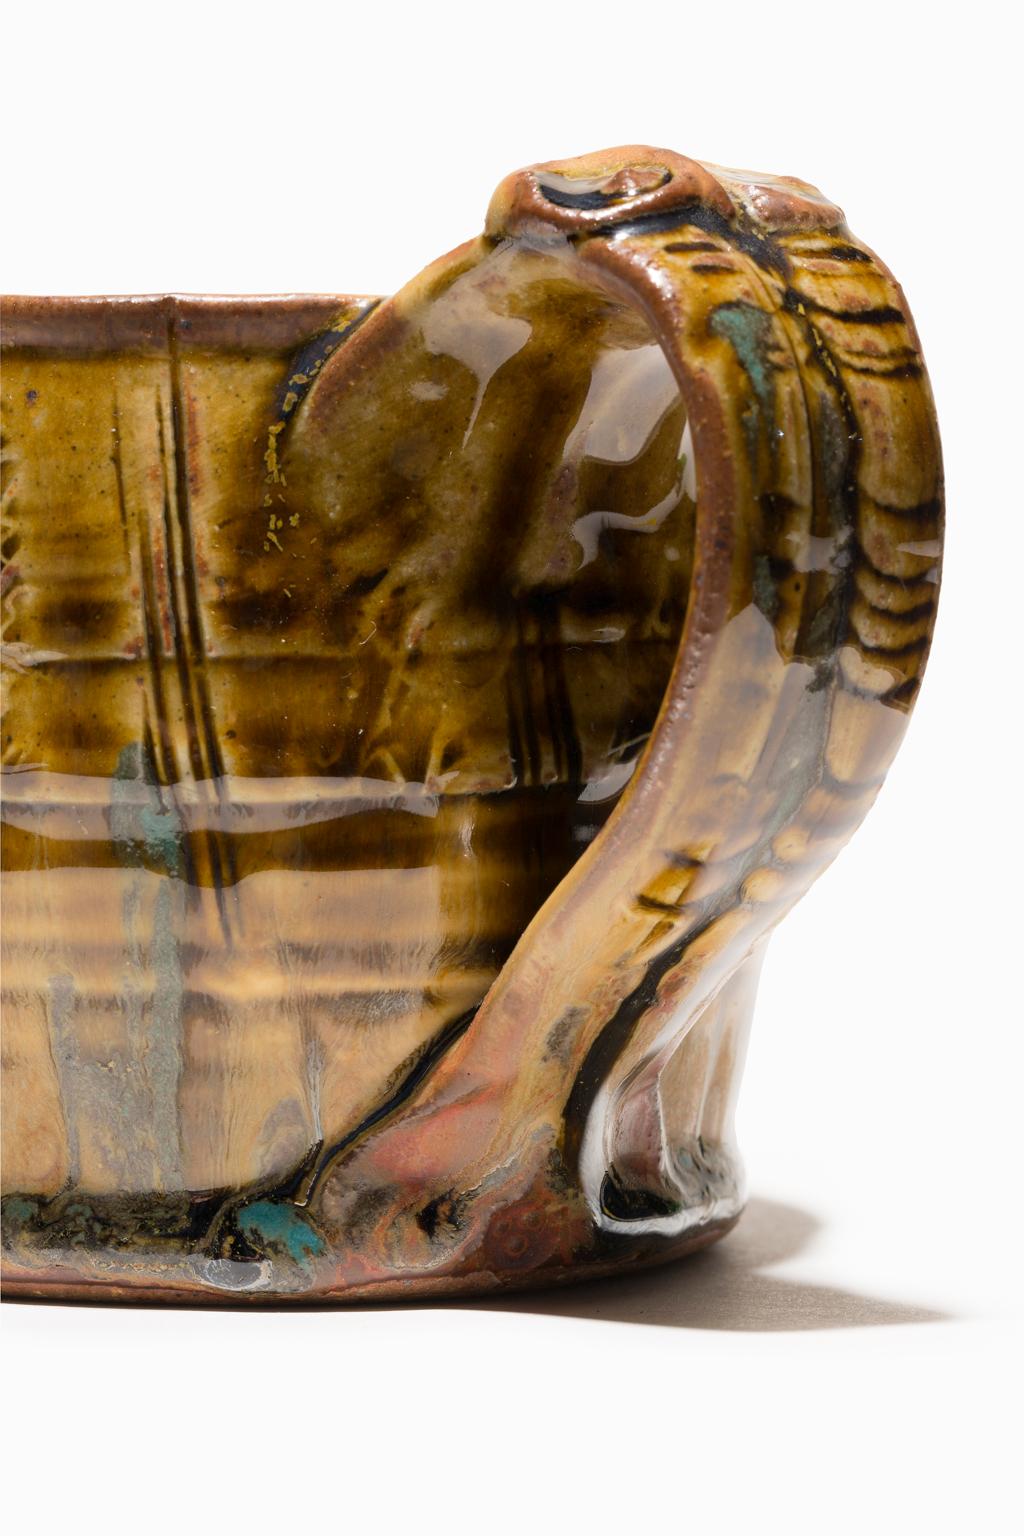 John Glick Plum Tree Pottery , Stoneware Mug, Deep Earth Tones, Glazed For Sale 1